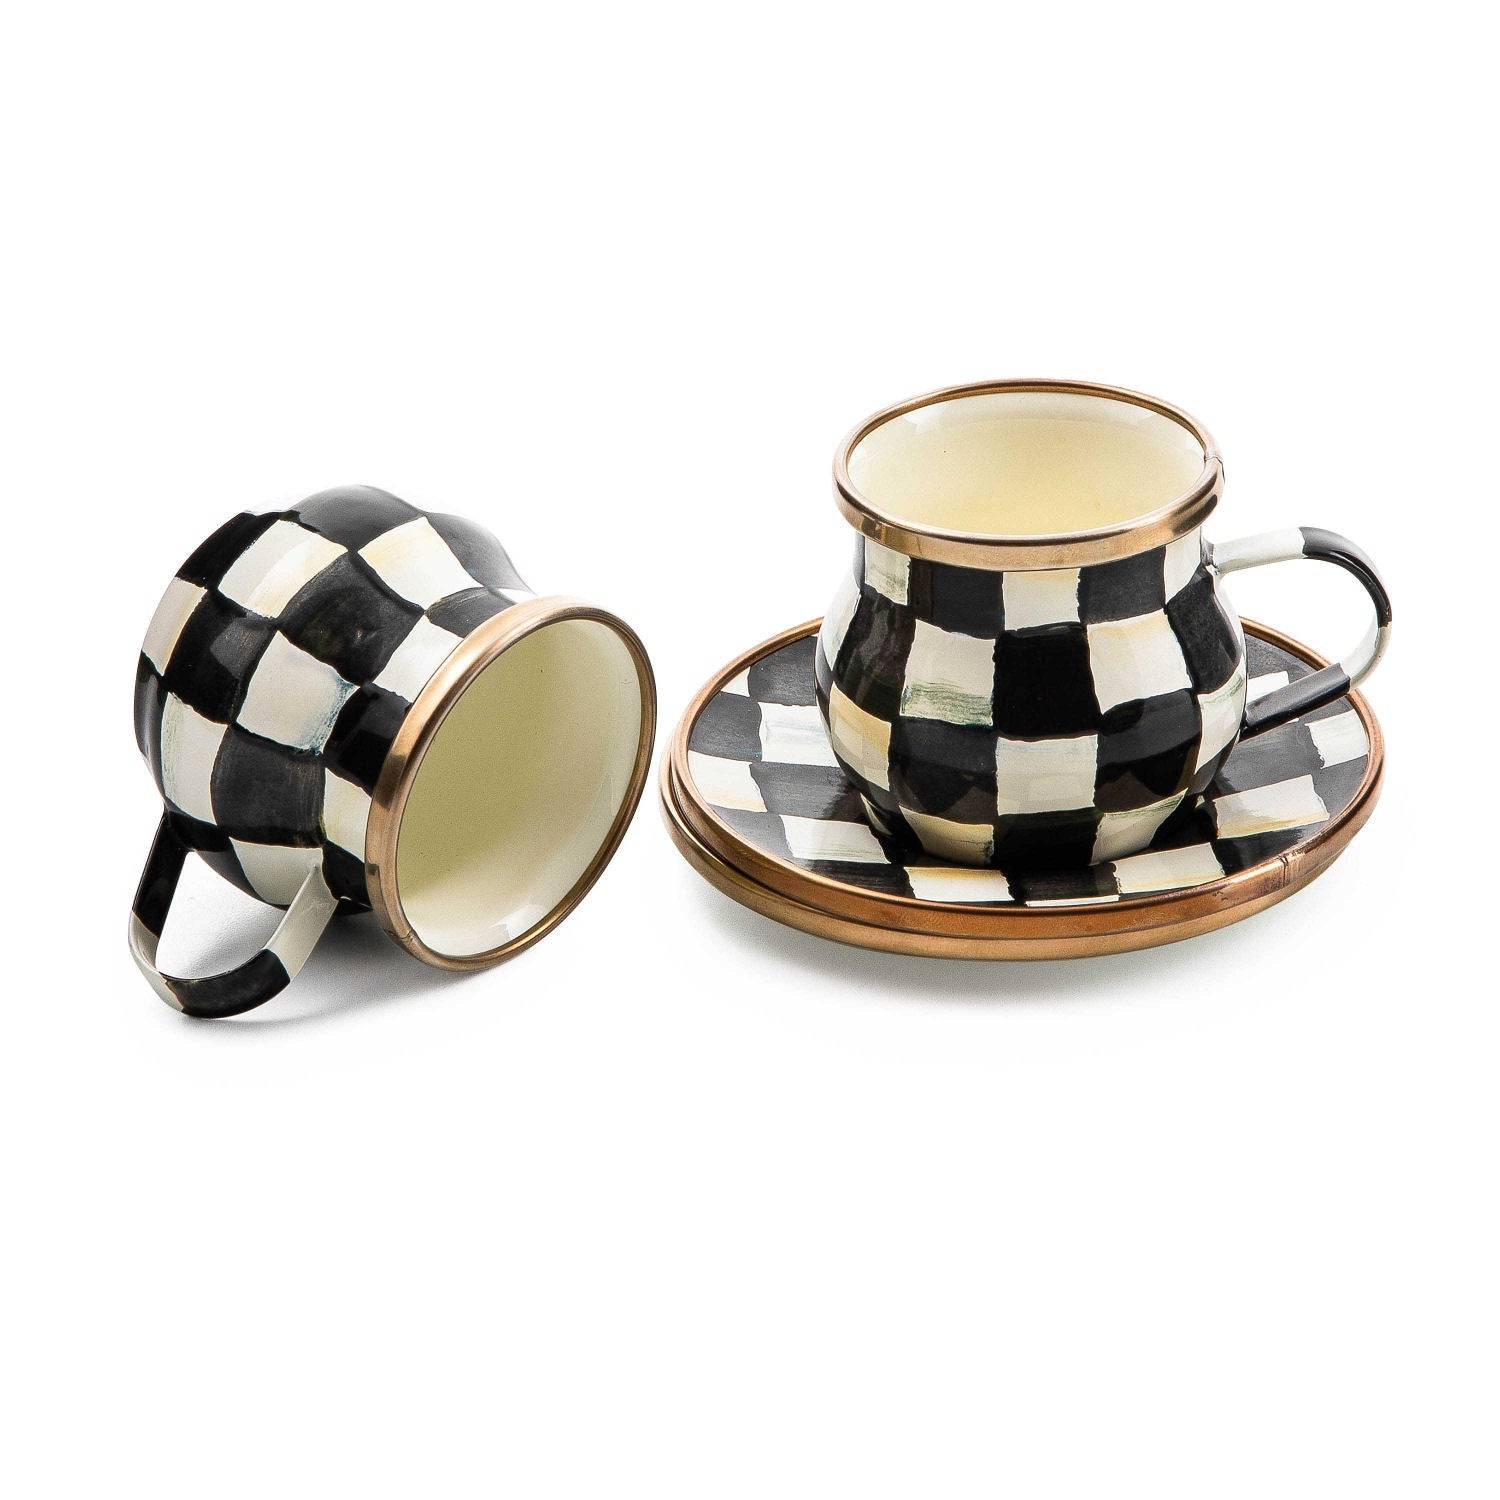 Courtly Check Enamel Espresso Cup & Saucer Set - |VESIMI Design|